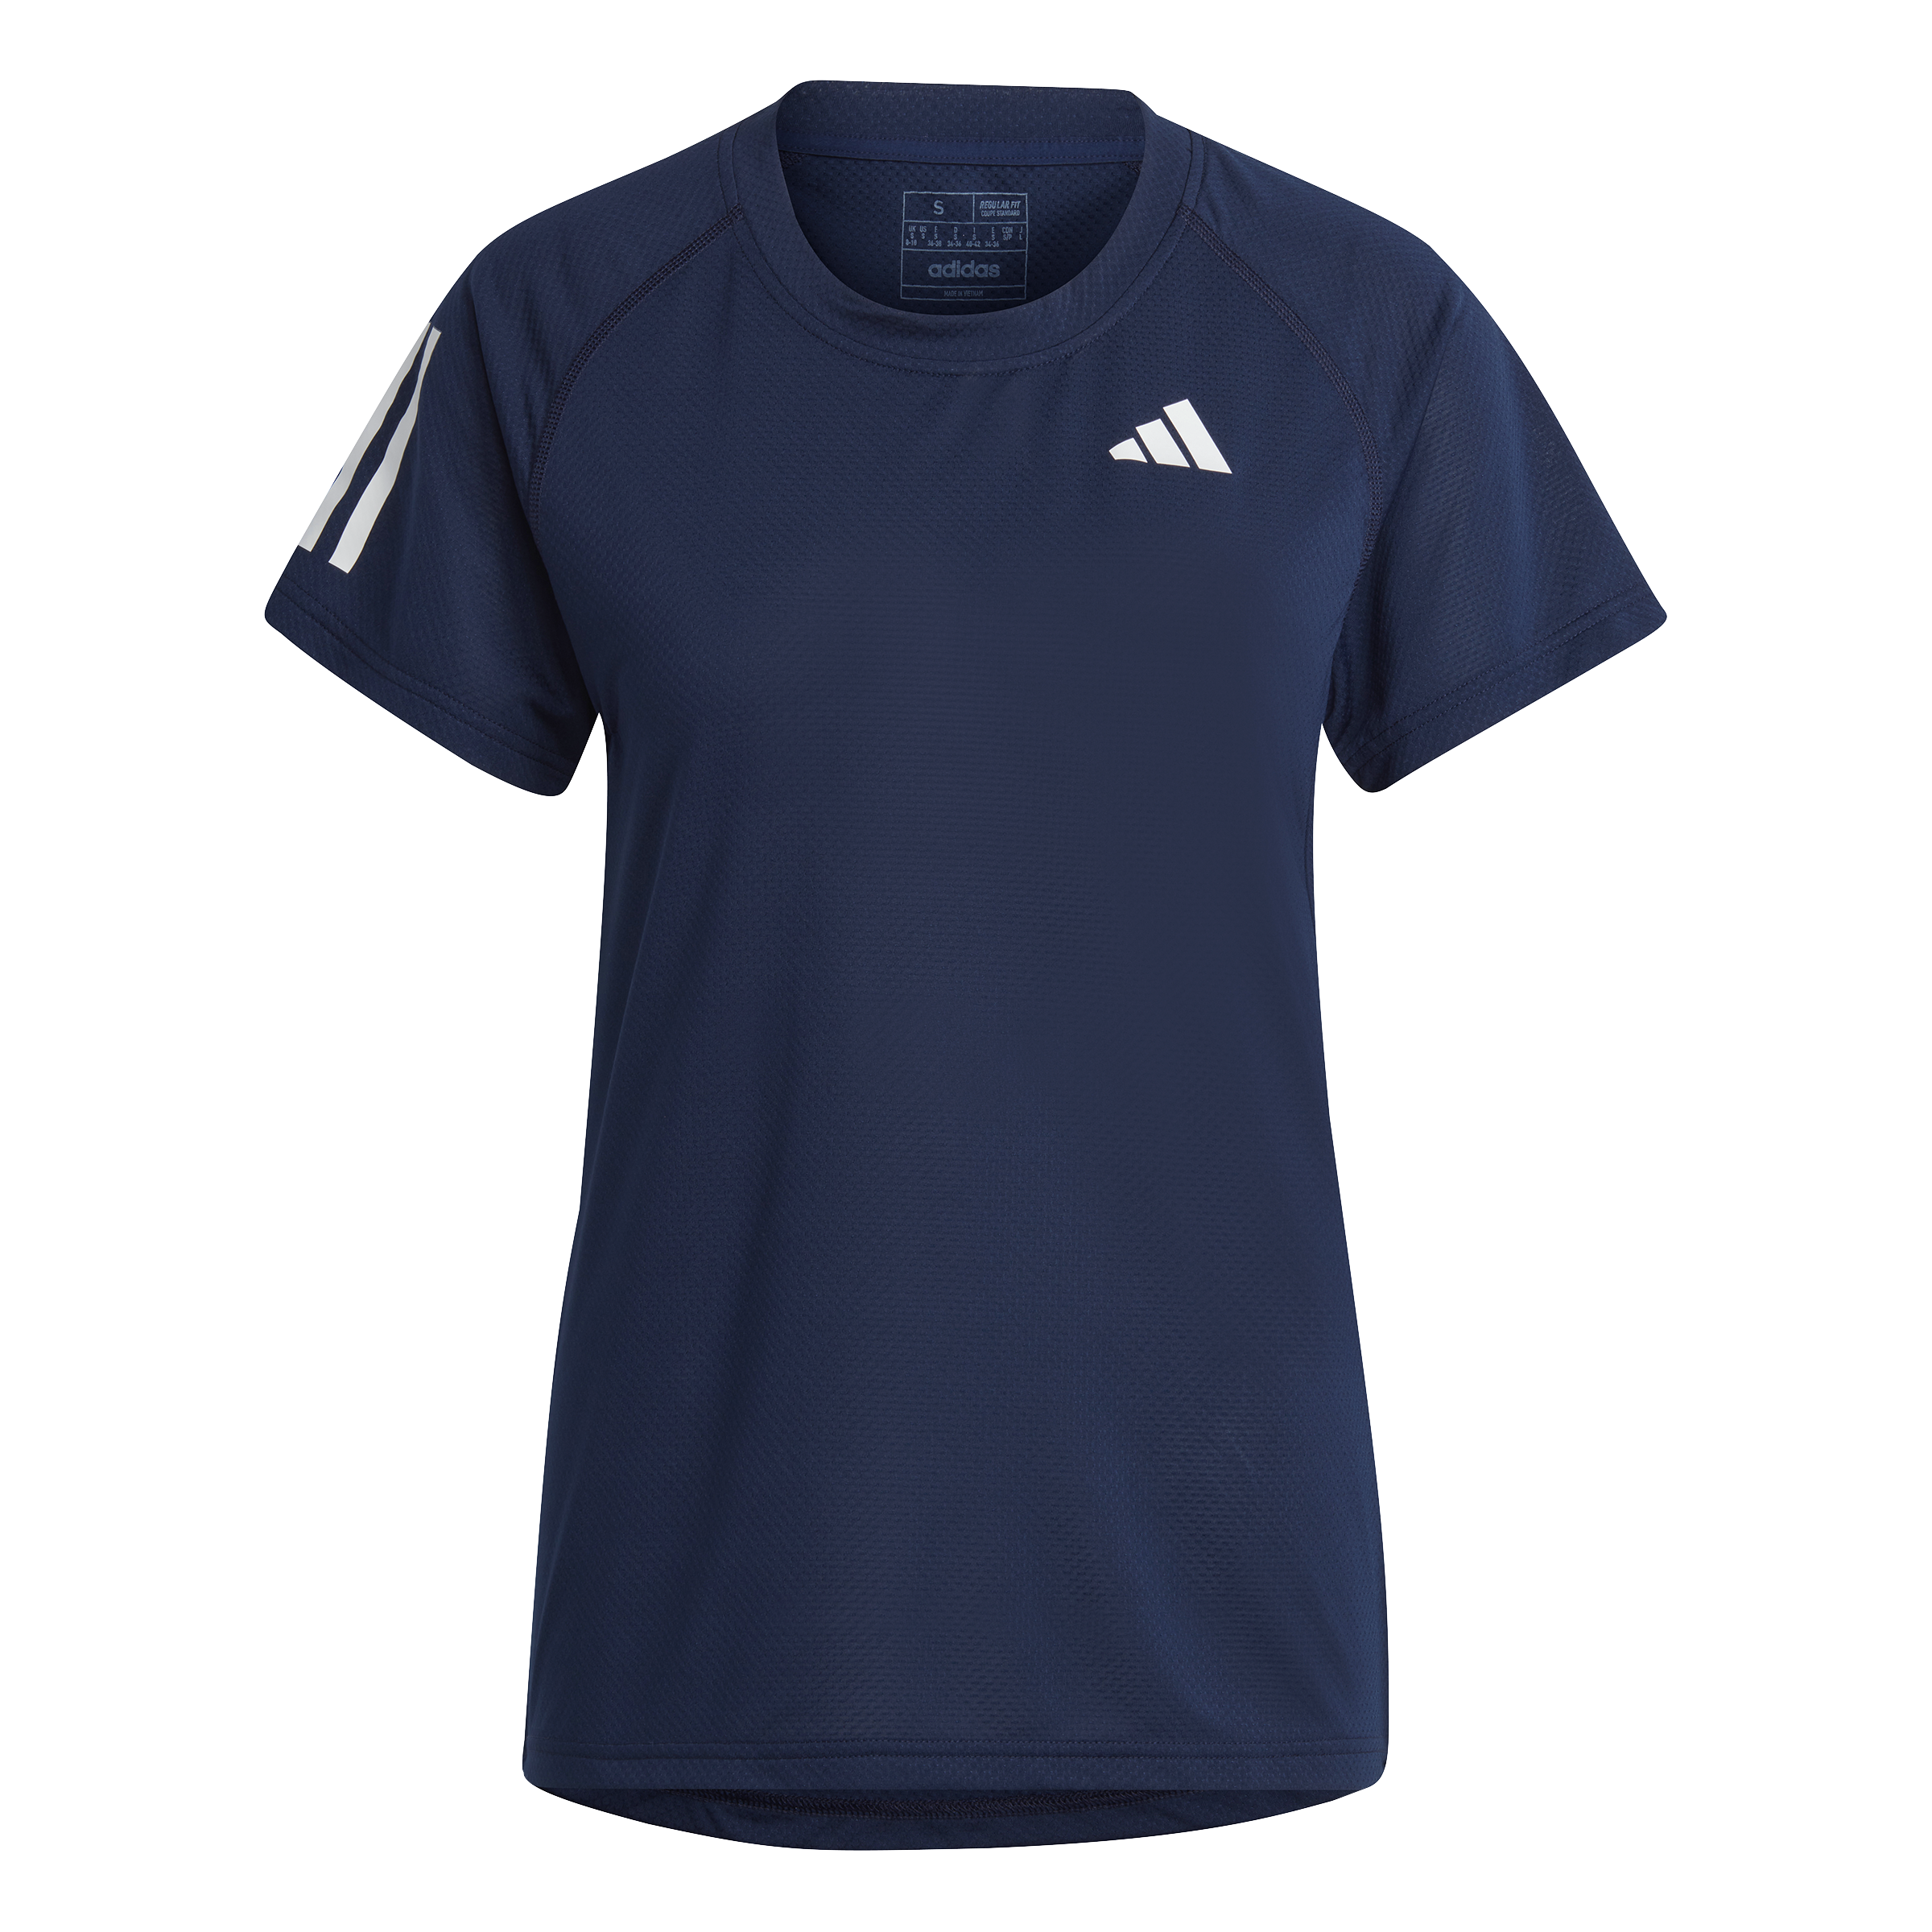 Adidas Club T-shirt Women (Navy) - S